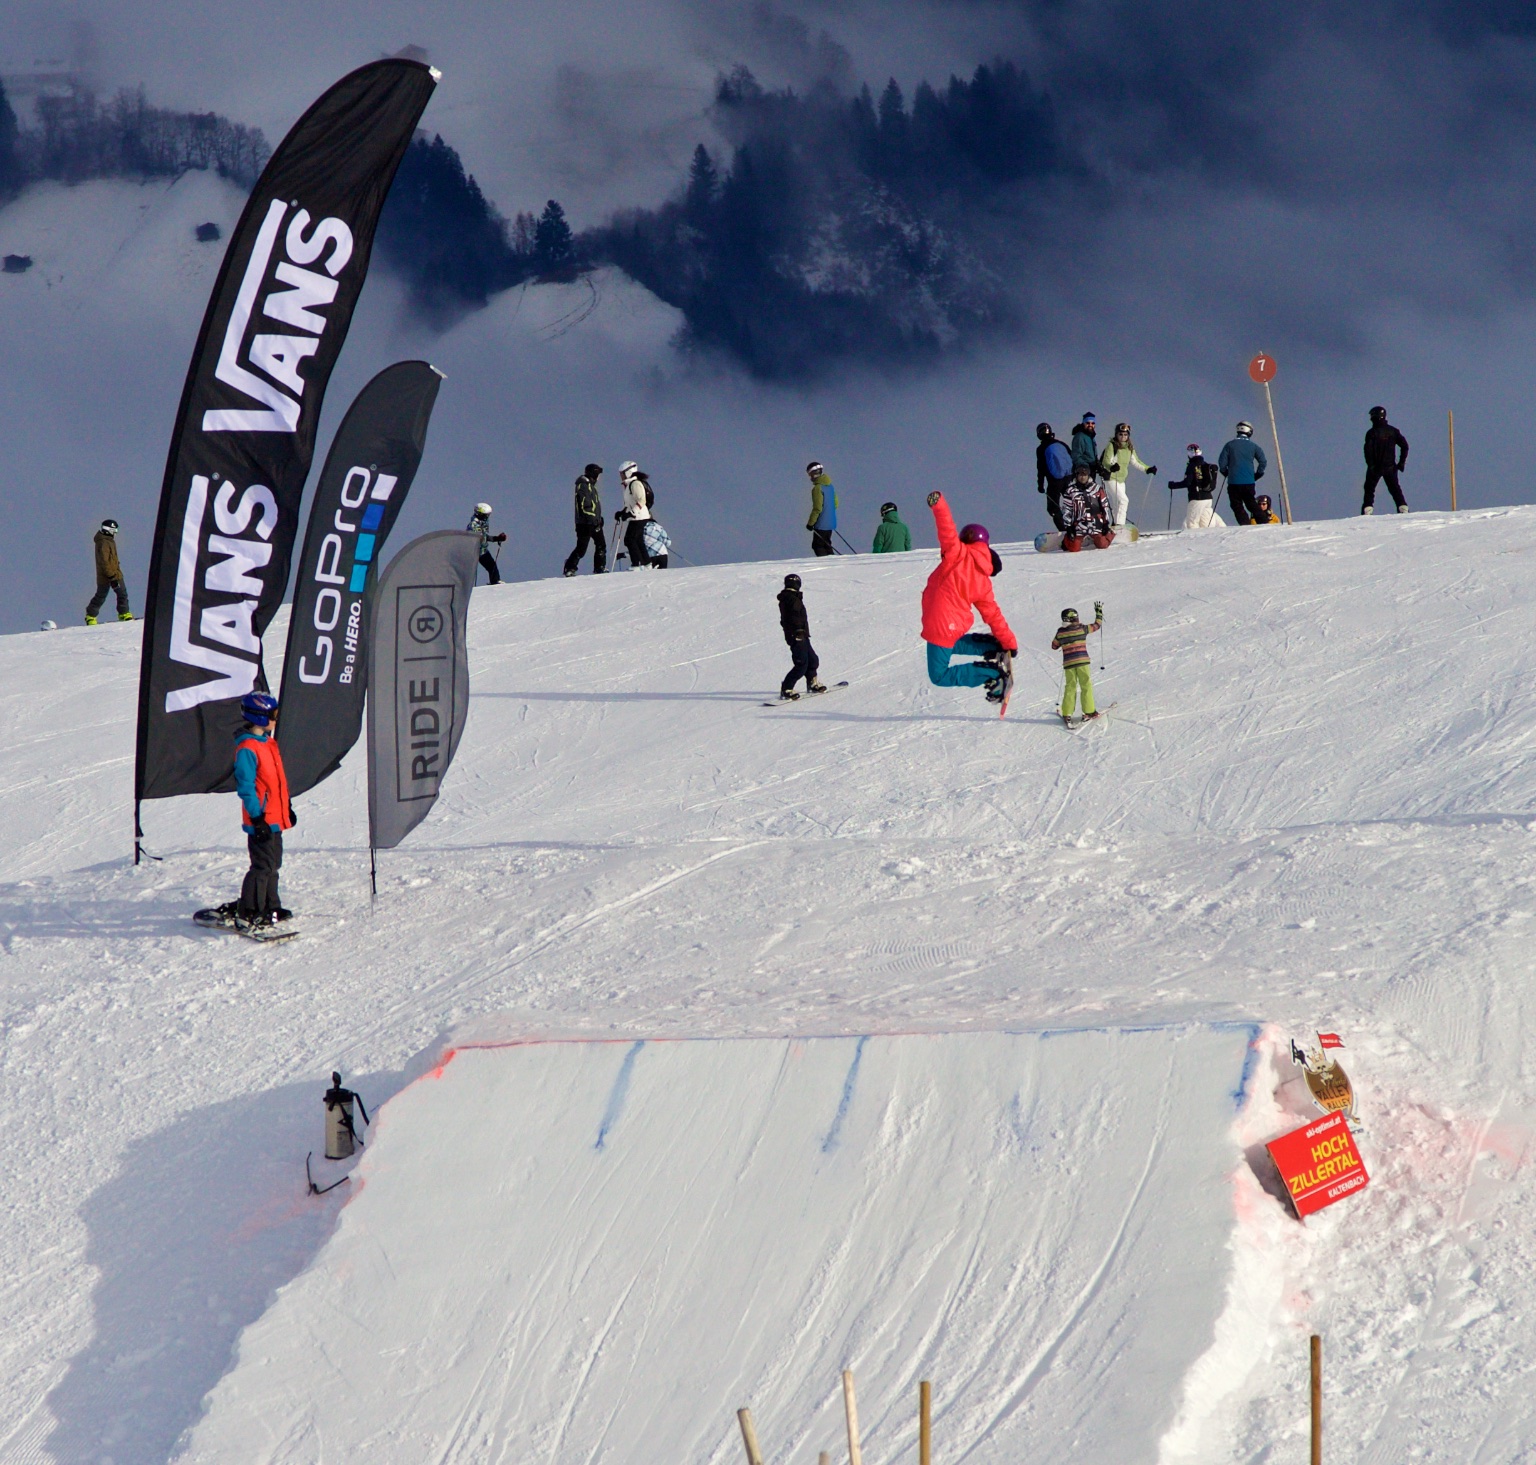 Zillertal VÄLLEY RÄLLEY hosted by Ride Snowboards 2015 / 2016 Startschuss im Betterpark Hochzillertal